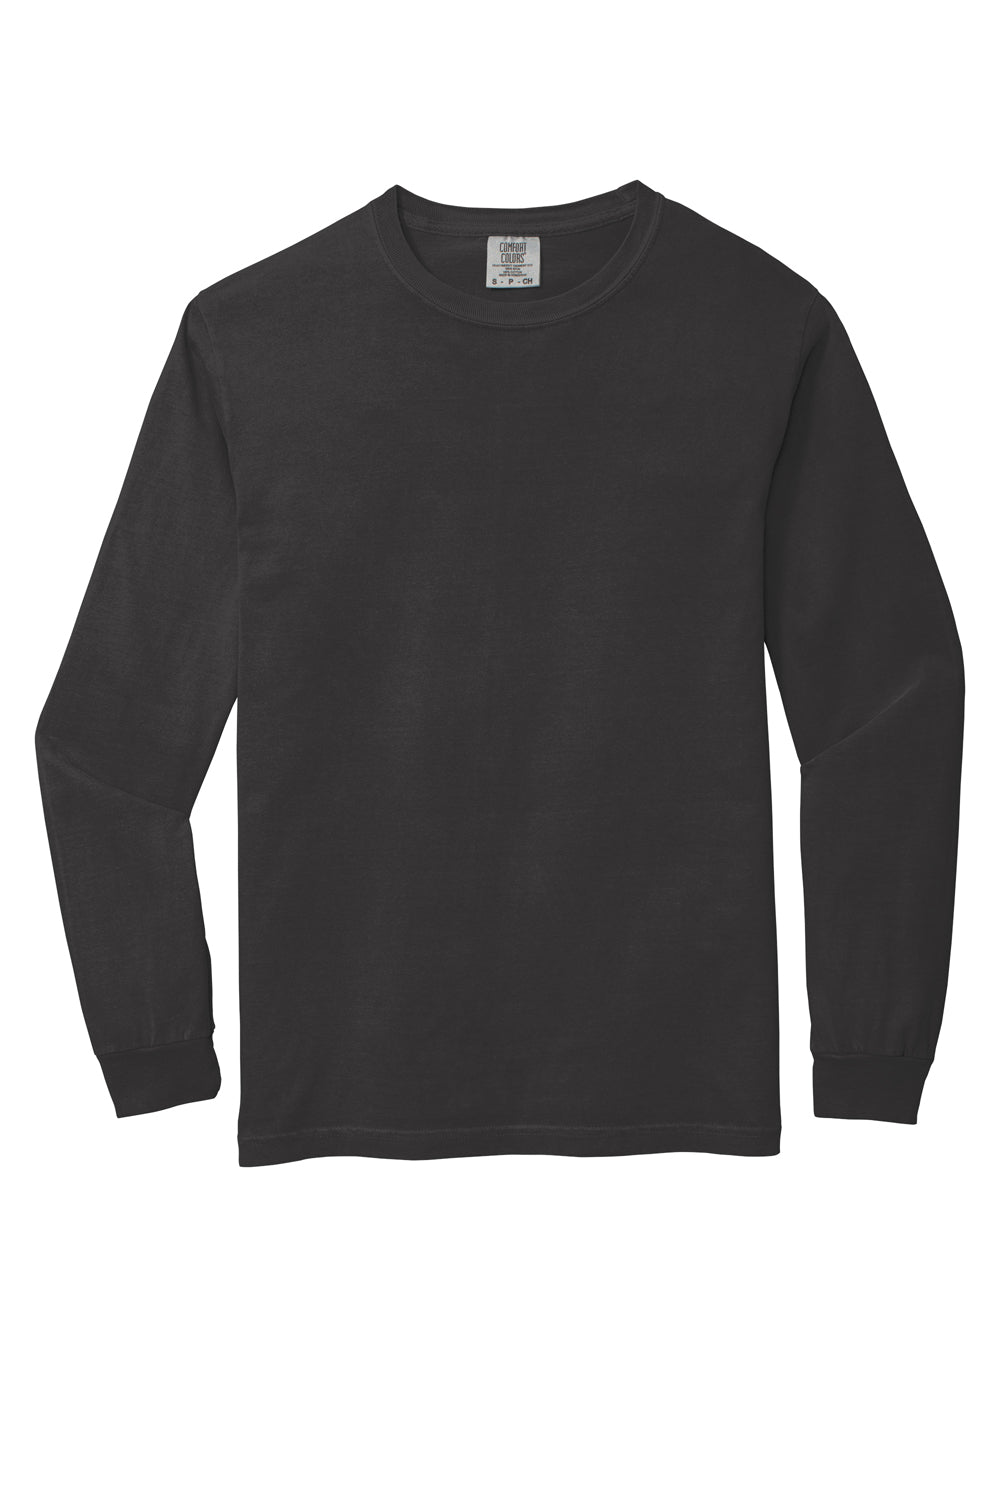 Comfort Colors 6014/C6014 Mens Long Sleeve Crewneck T-Shirt Graphite Grey Flat Front